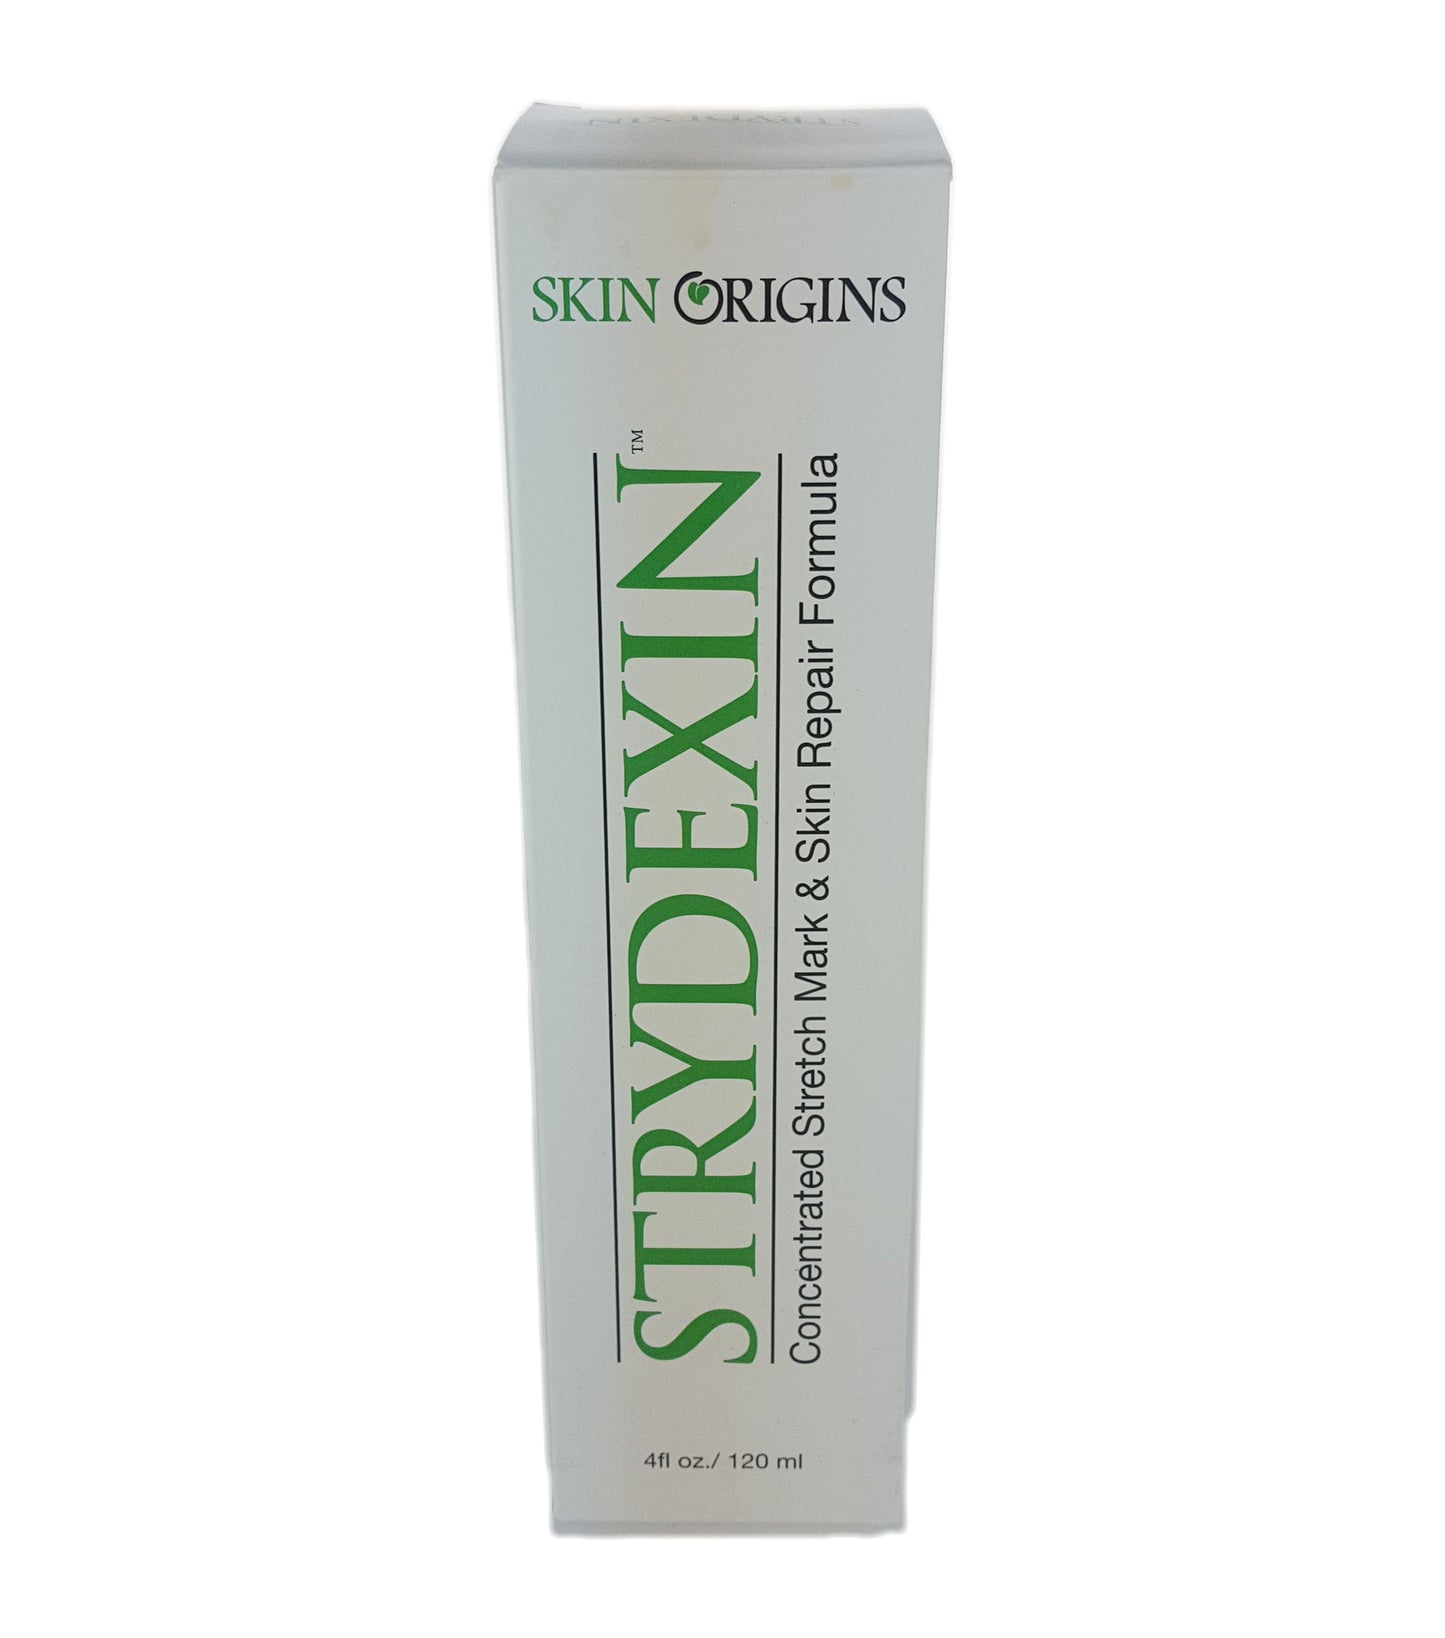 Skin Origins 'Strydexin' Concentrated Mark & Skin Repair Formula 4oz New In Box